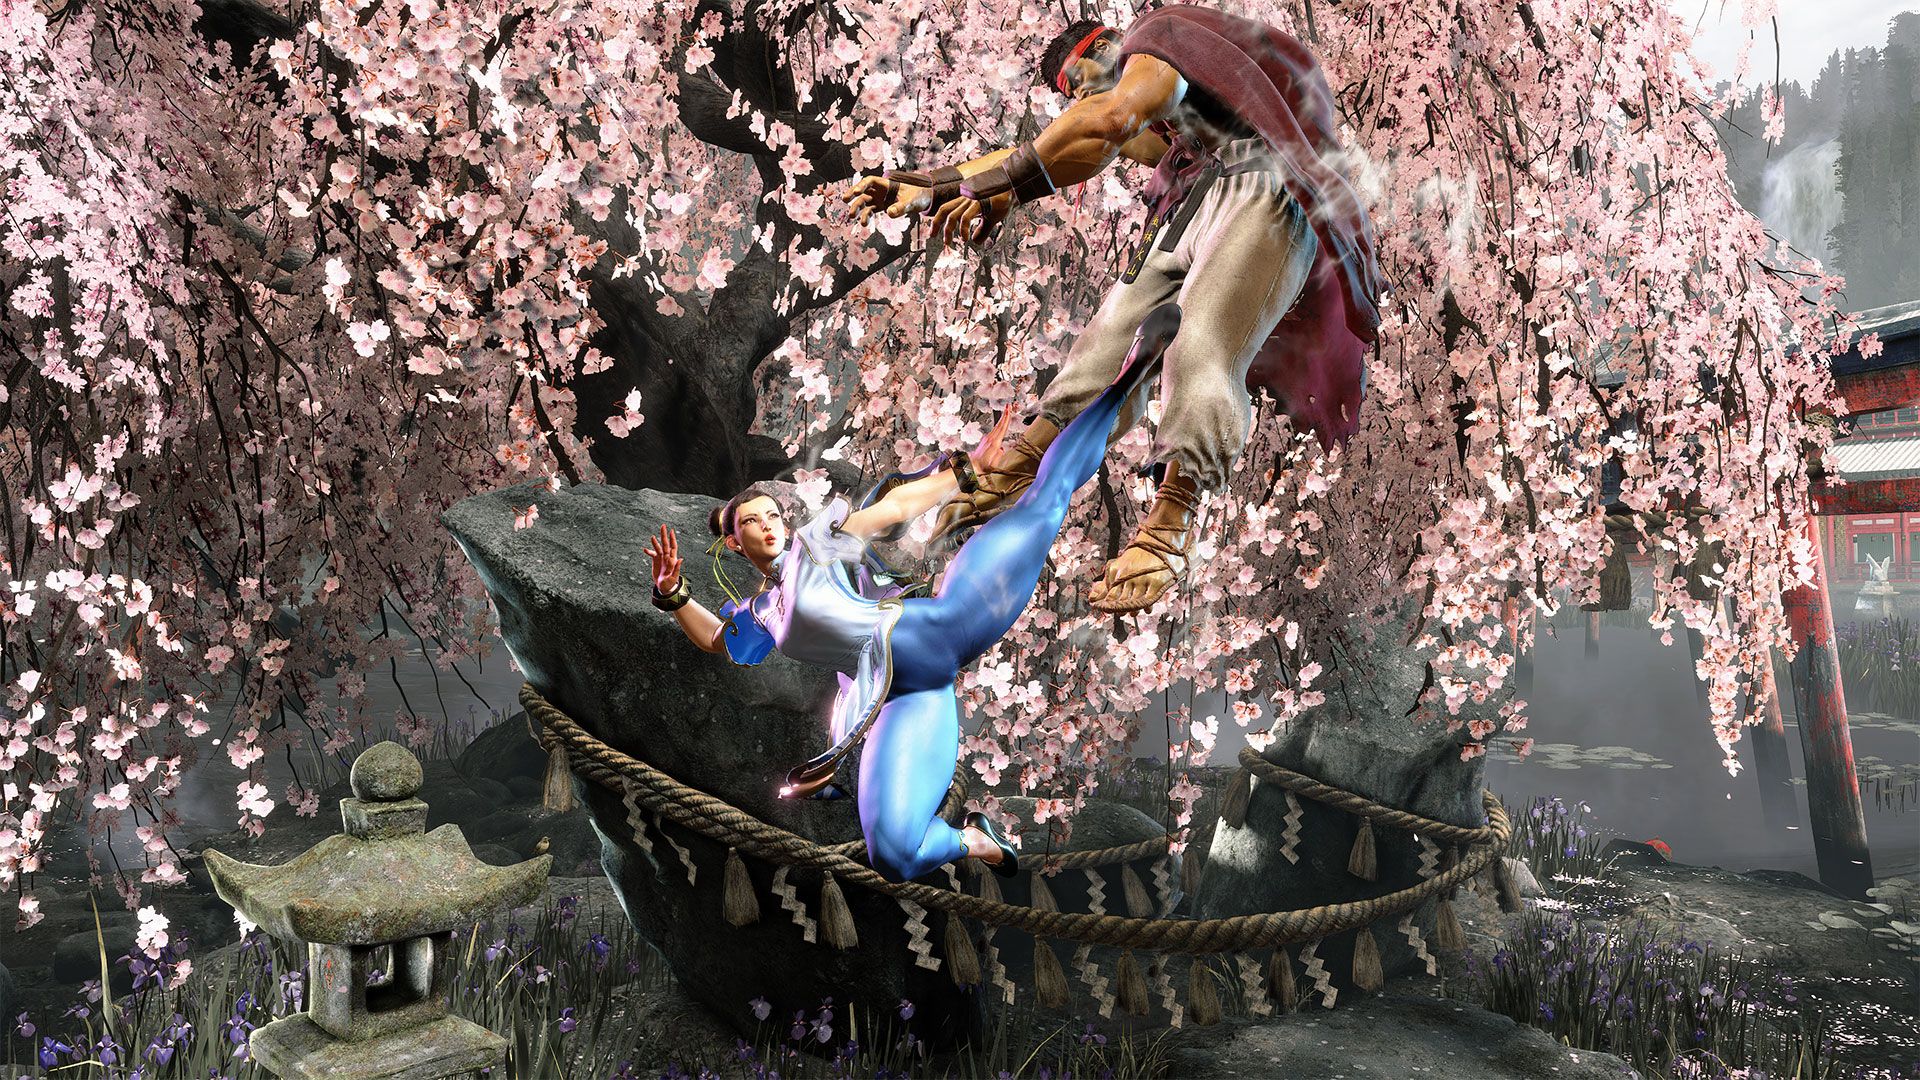 Chun-Li kicks Ryu in mid air